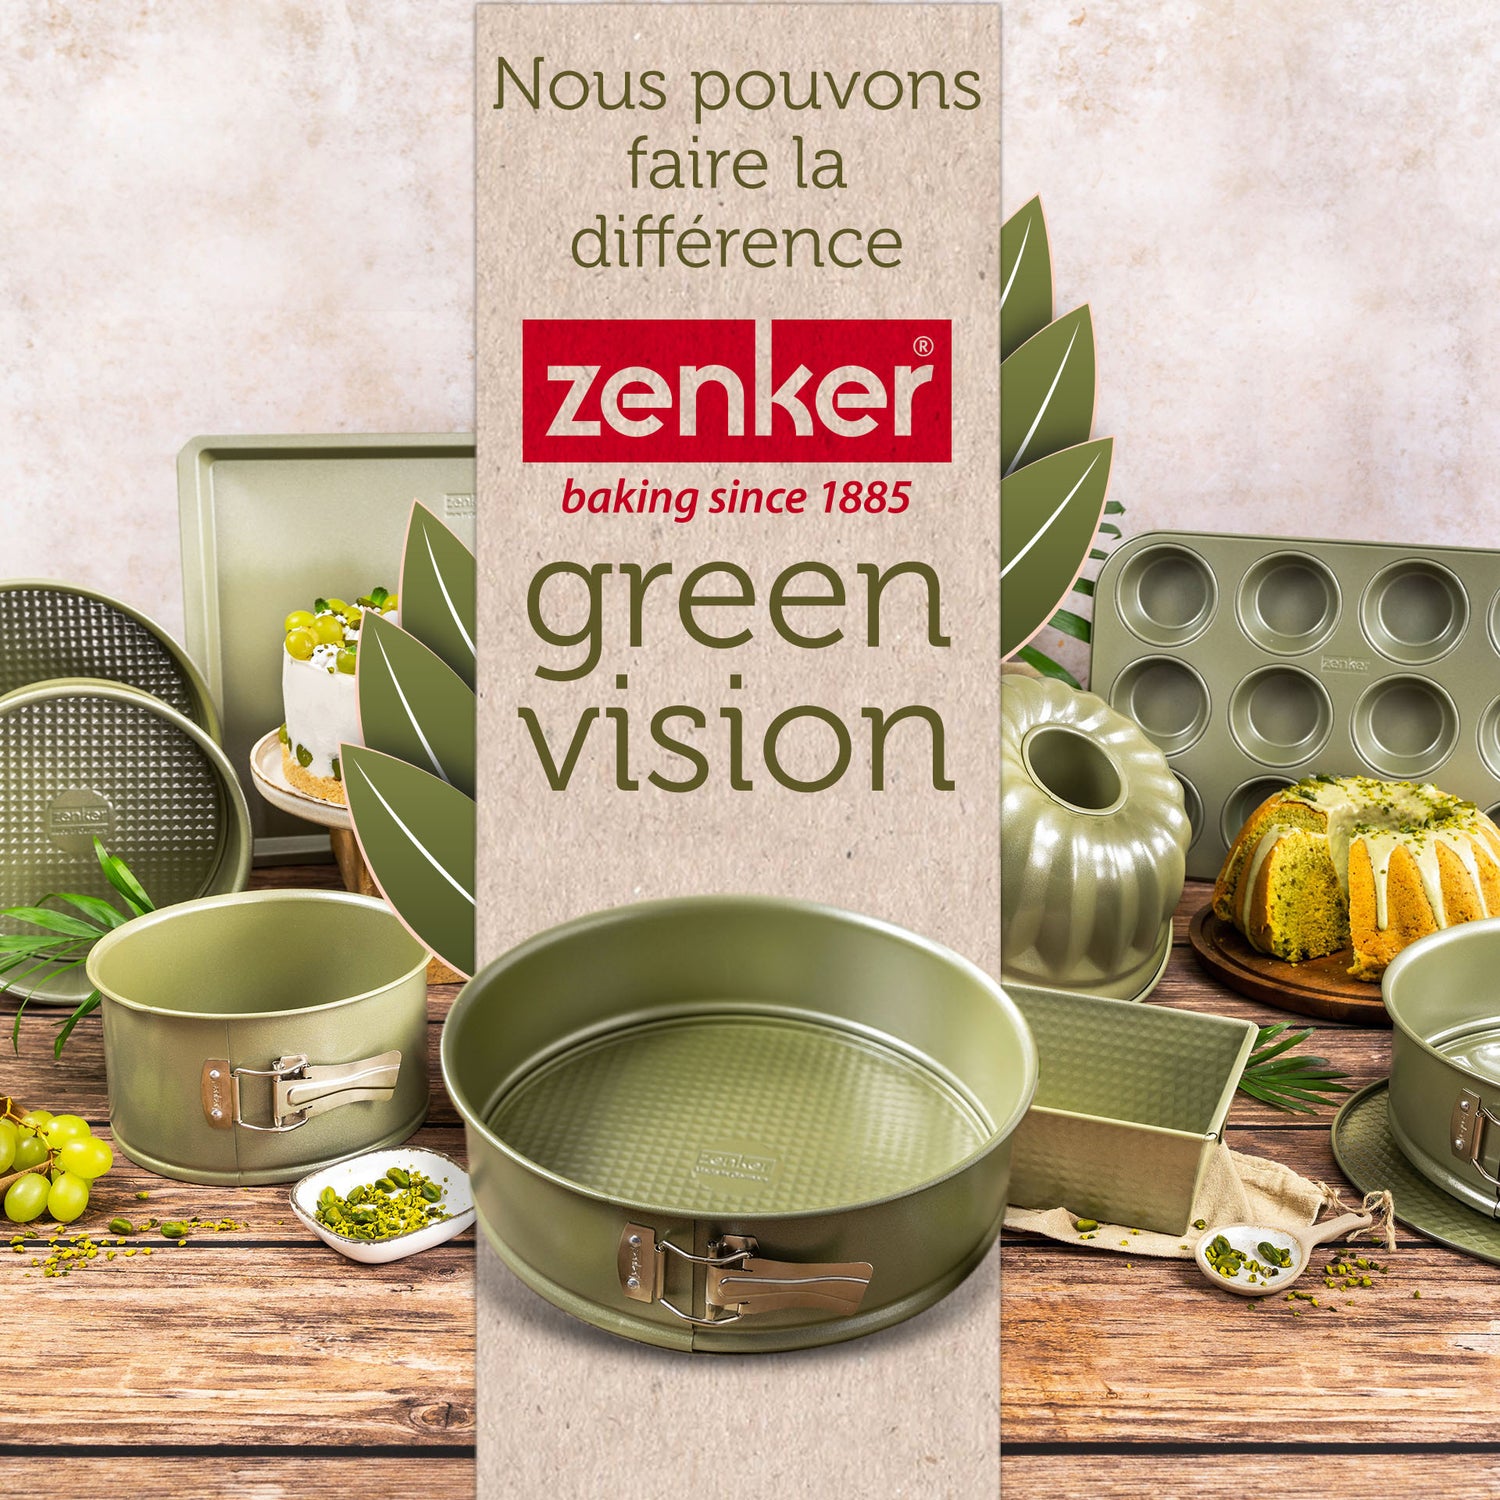 Moule à muffins 12 empreintes Zenker Green Vision